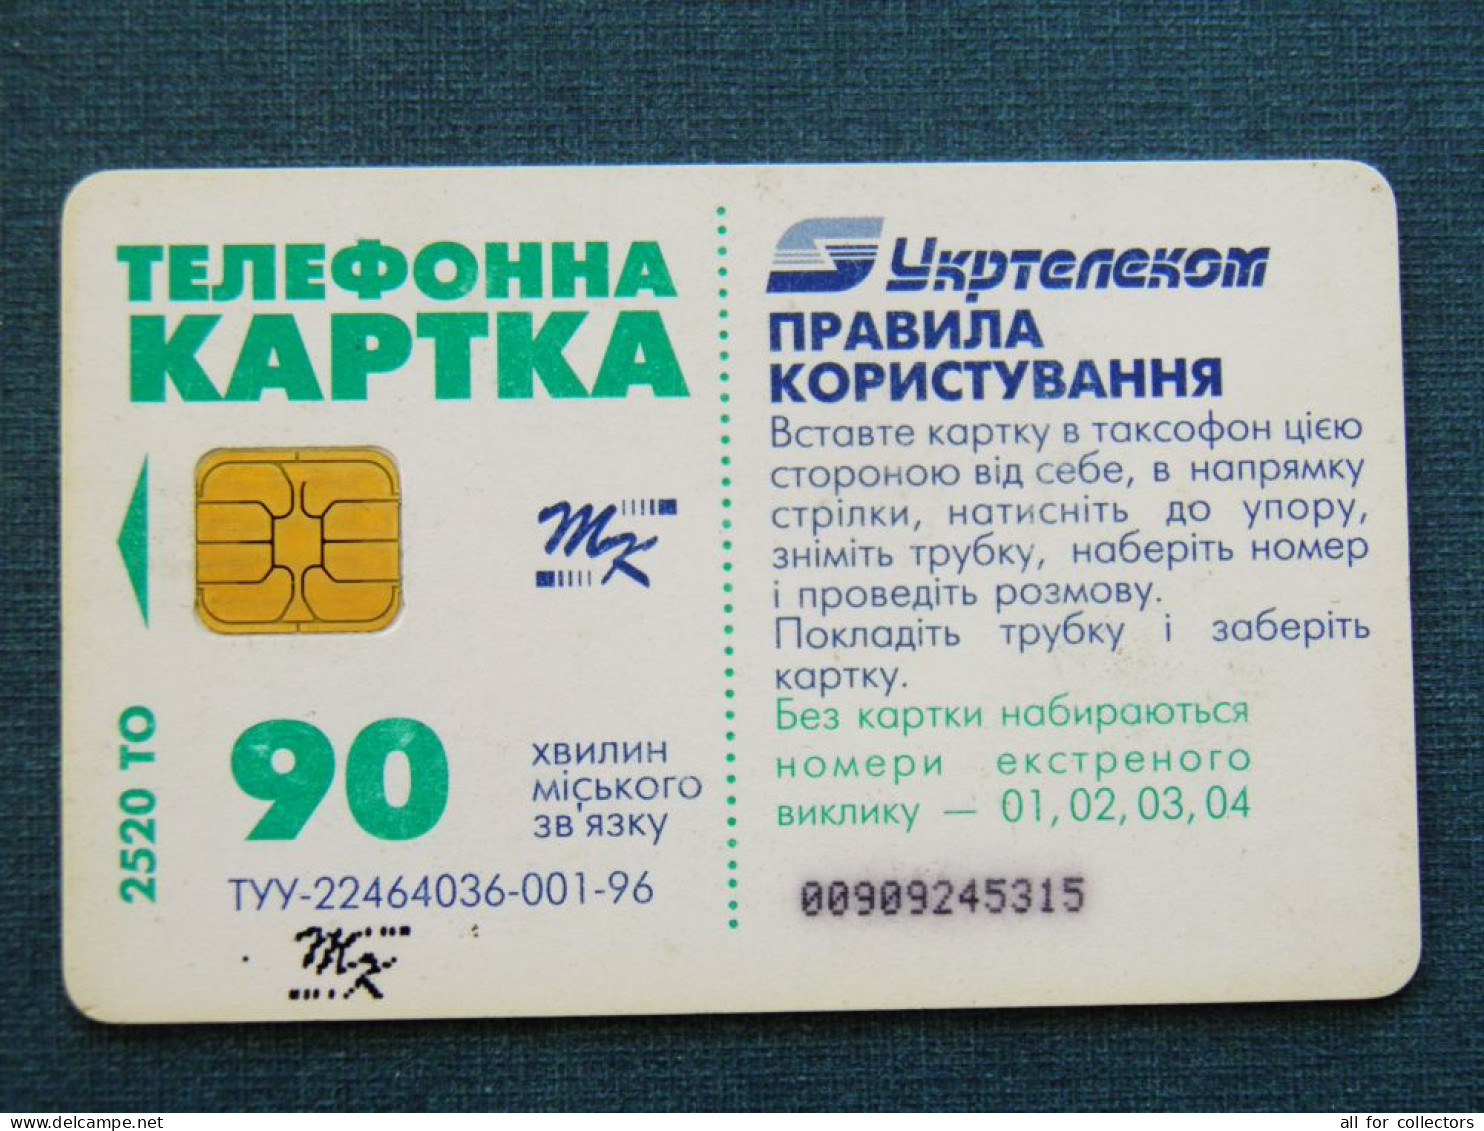 Phonecard Chip Advertising Oranta Insurance Company Art Icone  2520 Units 90 Calls UKRAINE - Ukraine